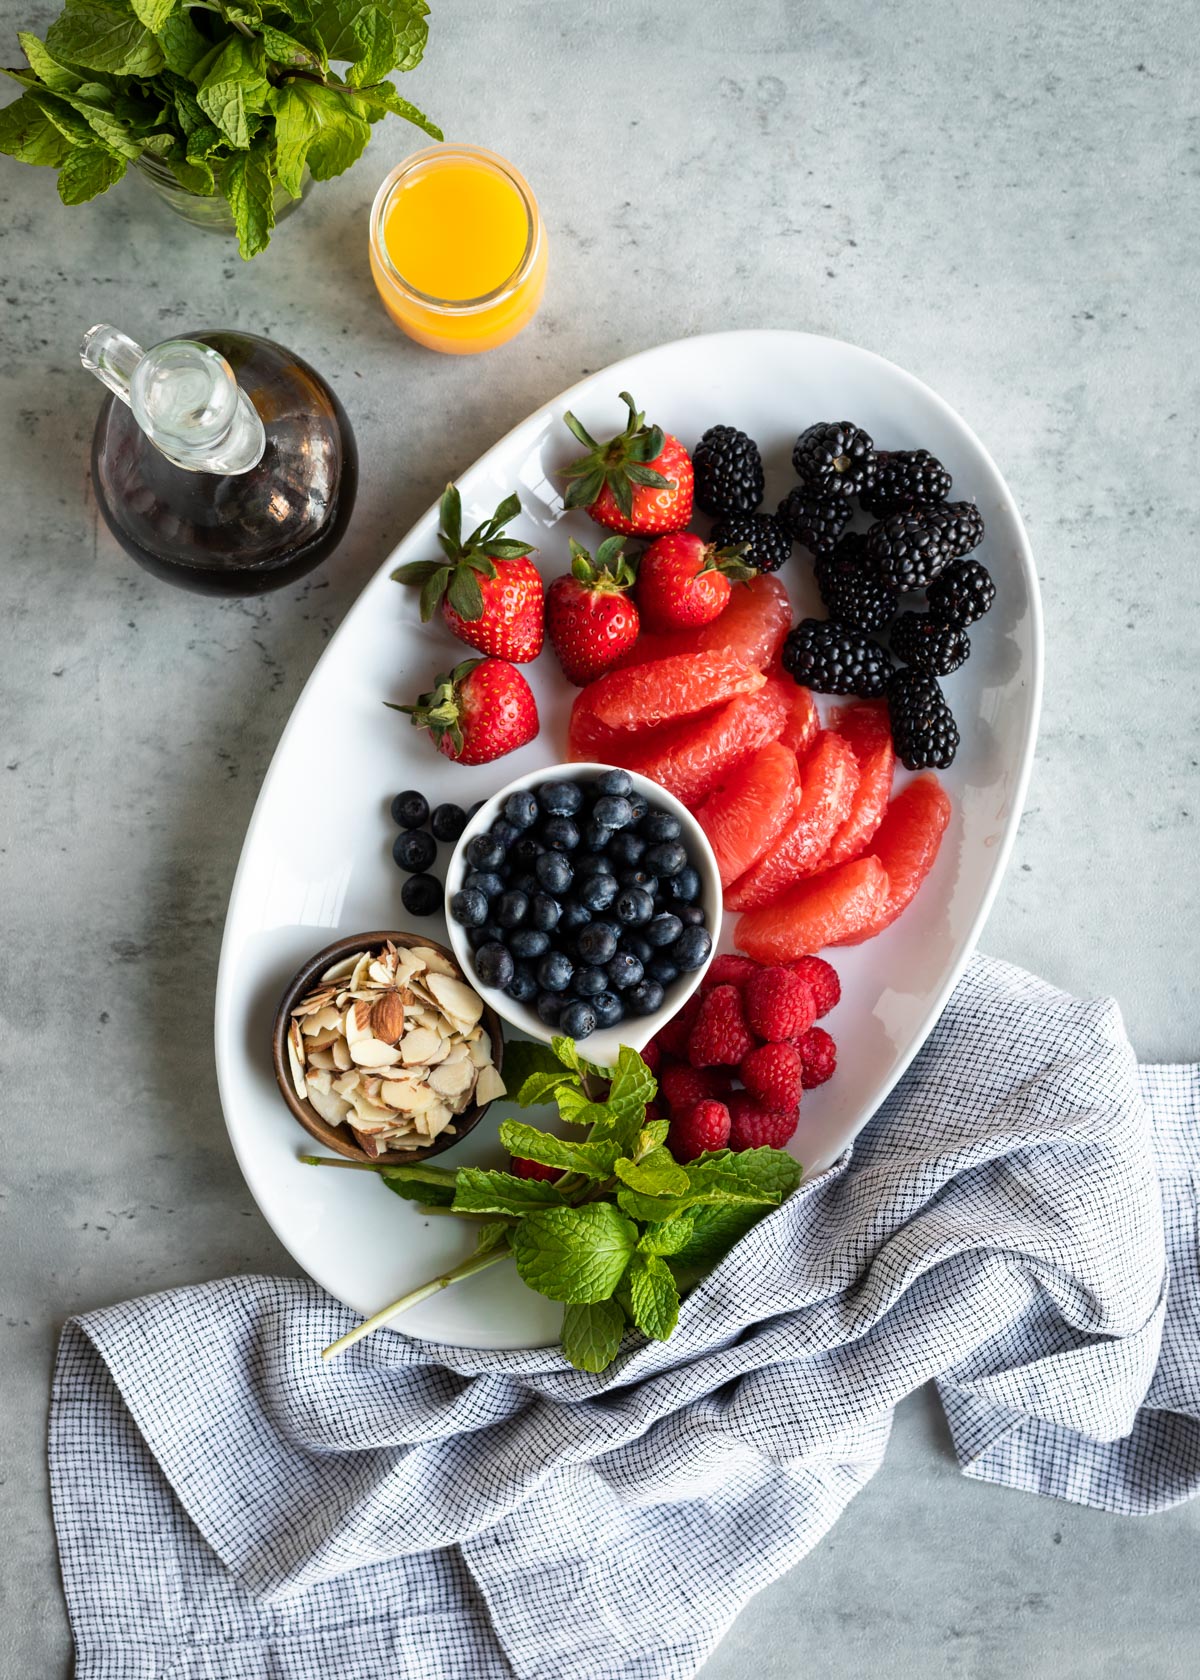 ingredients for berry fruit salad including blackberries, grapefruit, blueberries, raspberries, mint, and sliced almonds.